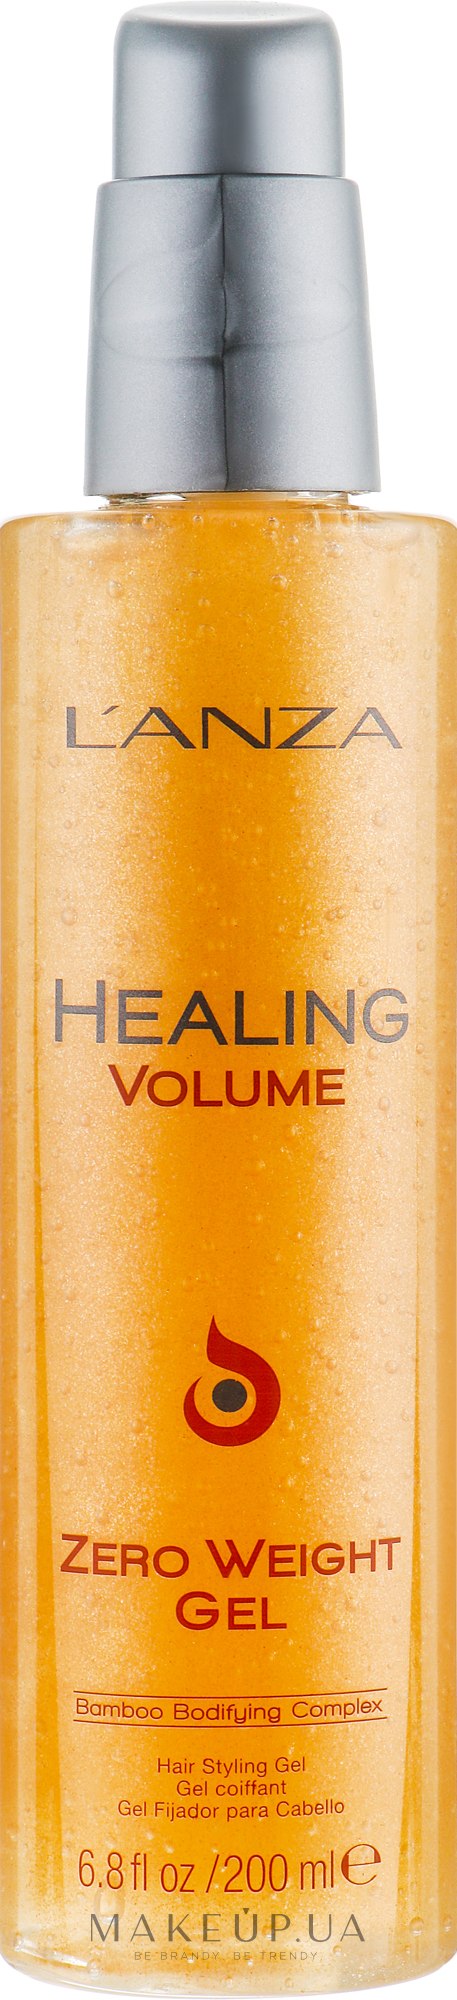 Невесомый гель со светоотражающими частицами - L'anza Healing Volume Zero Weight Gel — фото 200ml